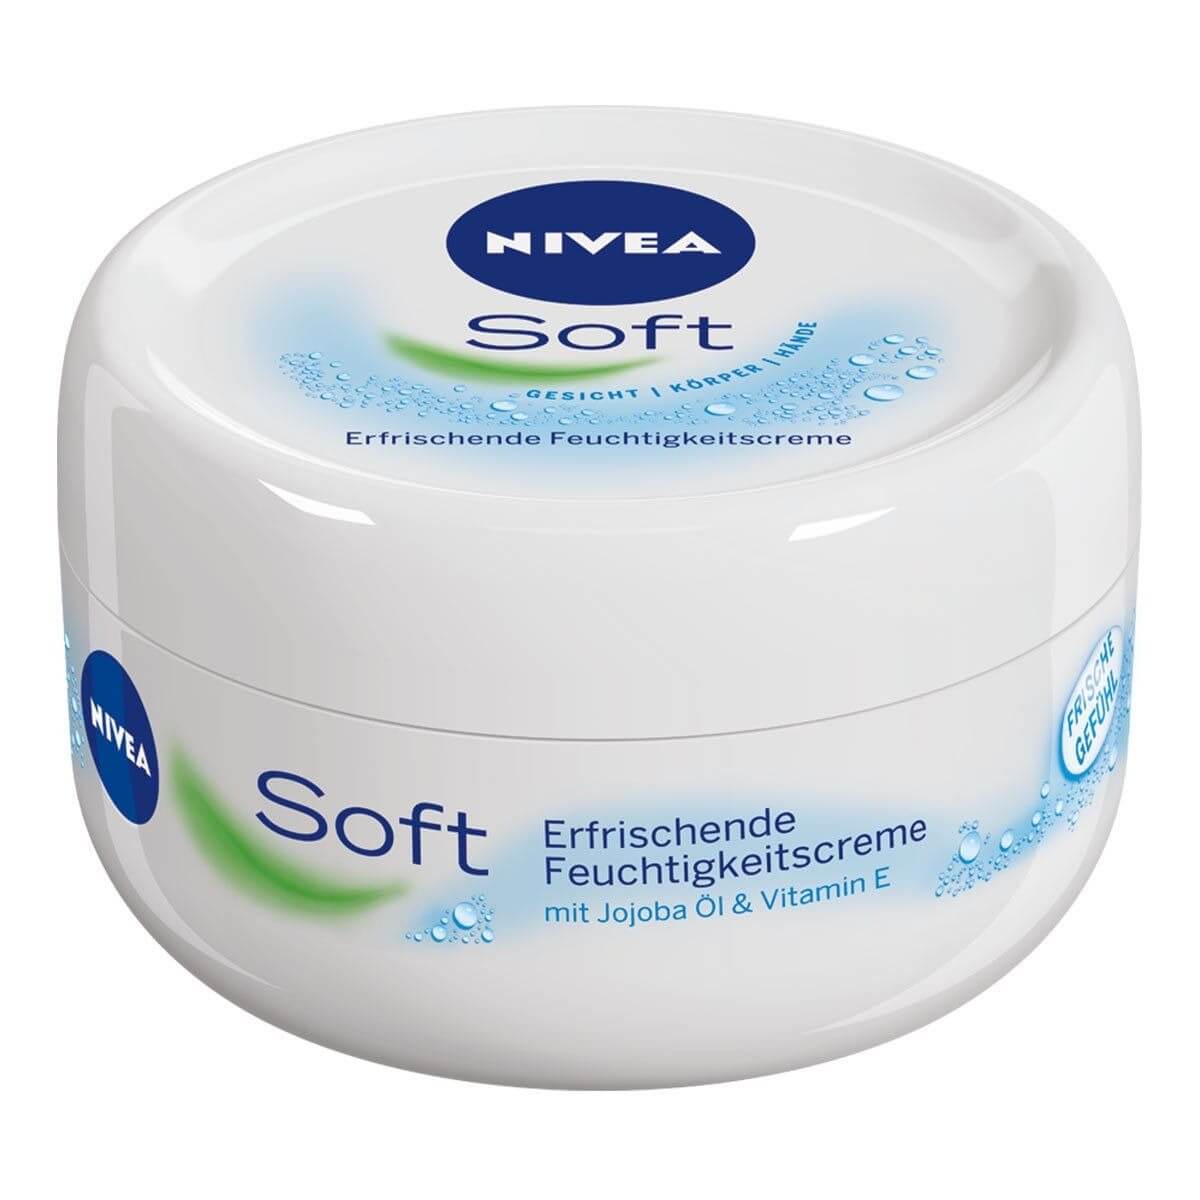 1591630062nivea-soft-moisturizing-cream-refreshingly-soft-100ml.jpg